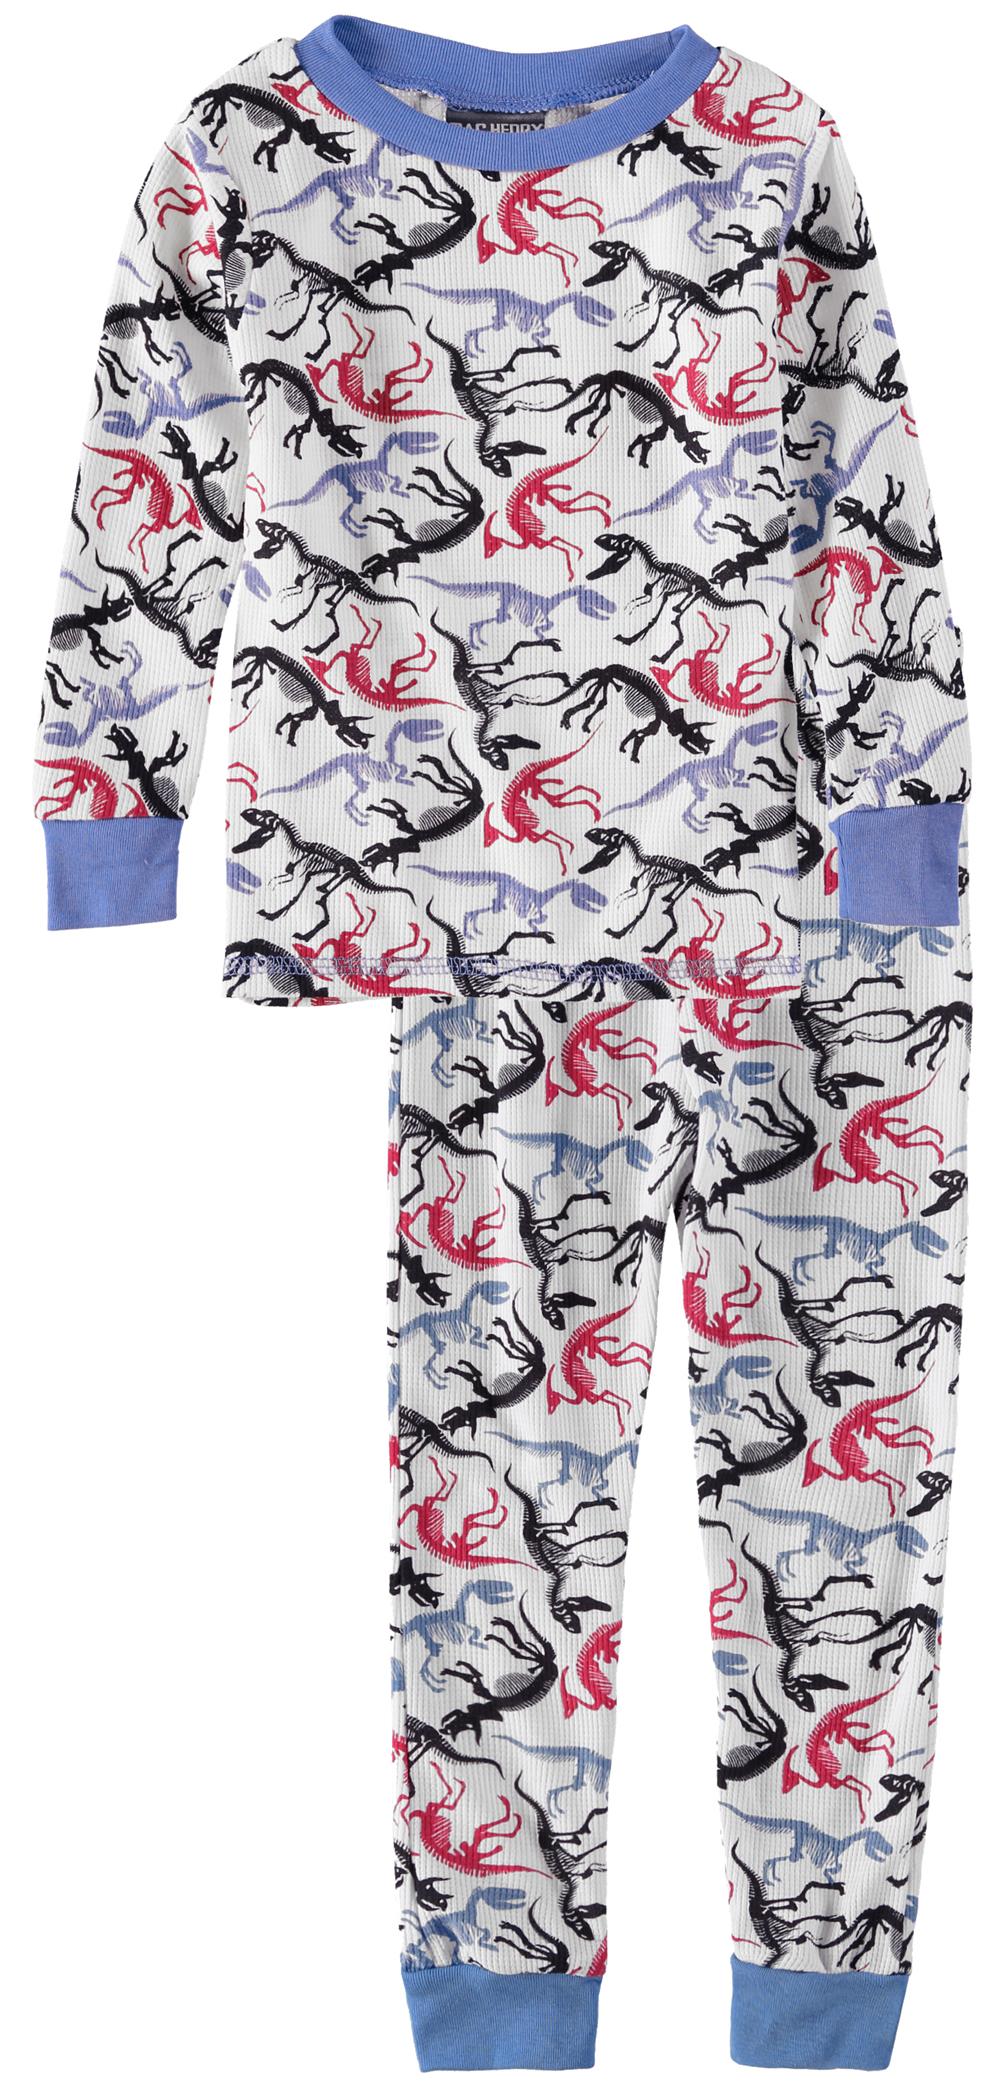 Mon Petit Boys 4-7 Long-Sleeve Thermal Underwear Pajama Set